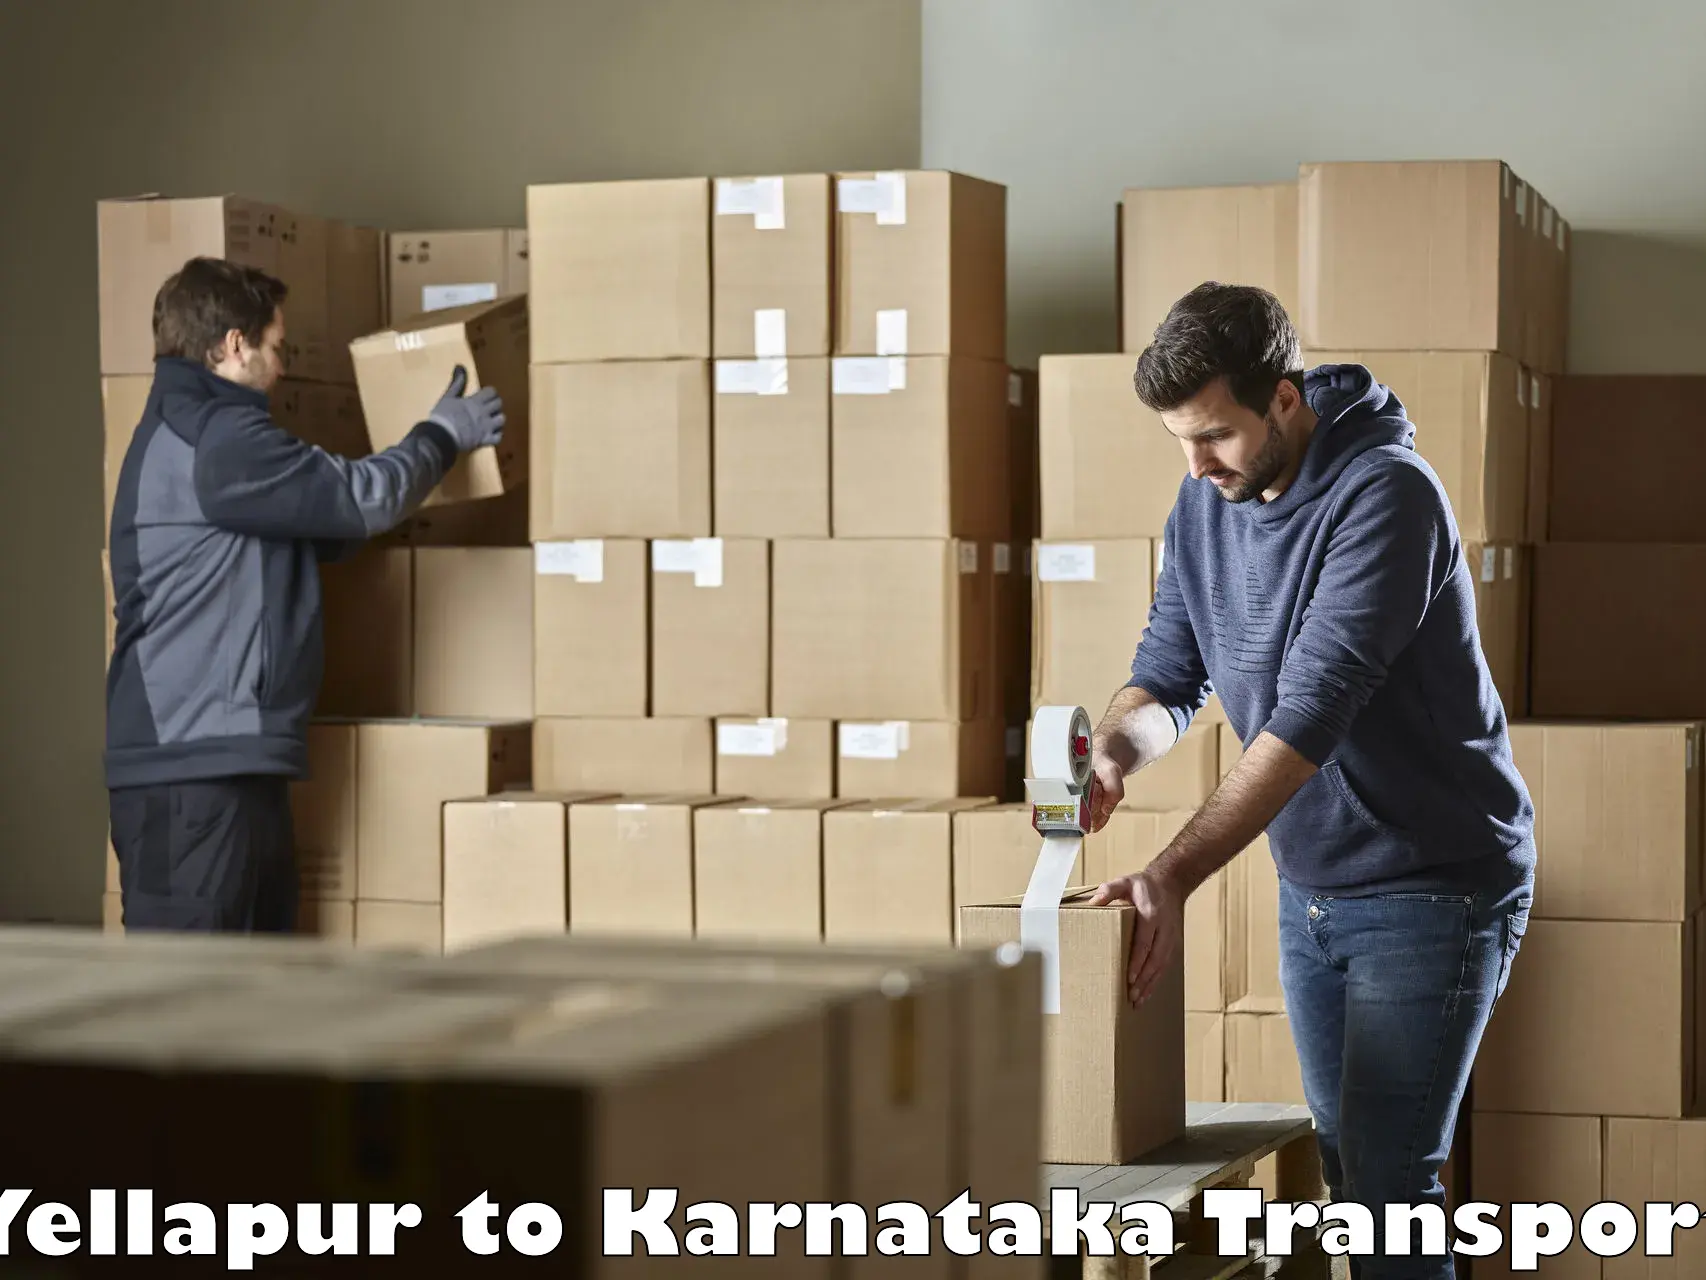 Furniture transport service Yellapur to Banavara